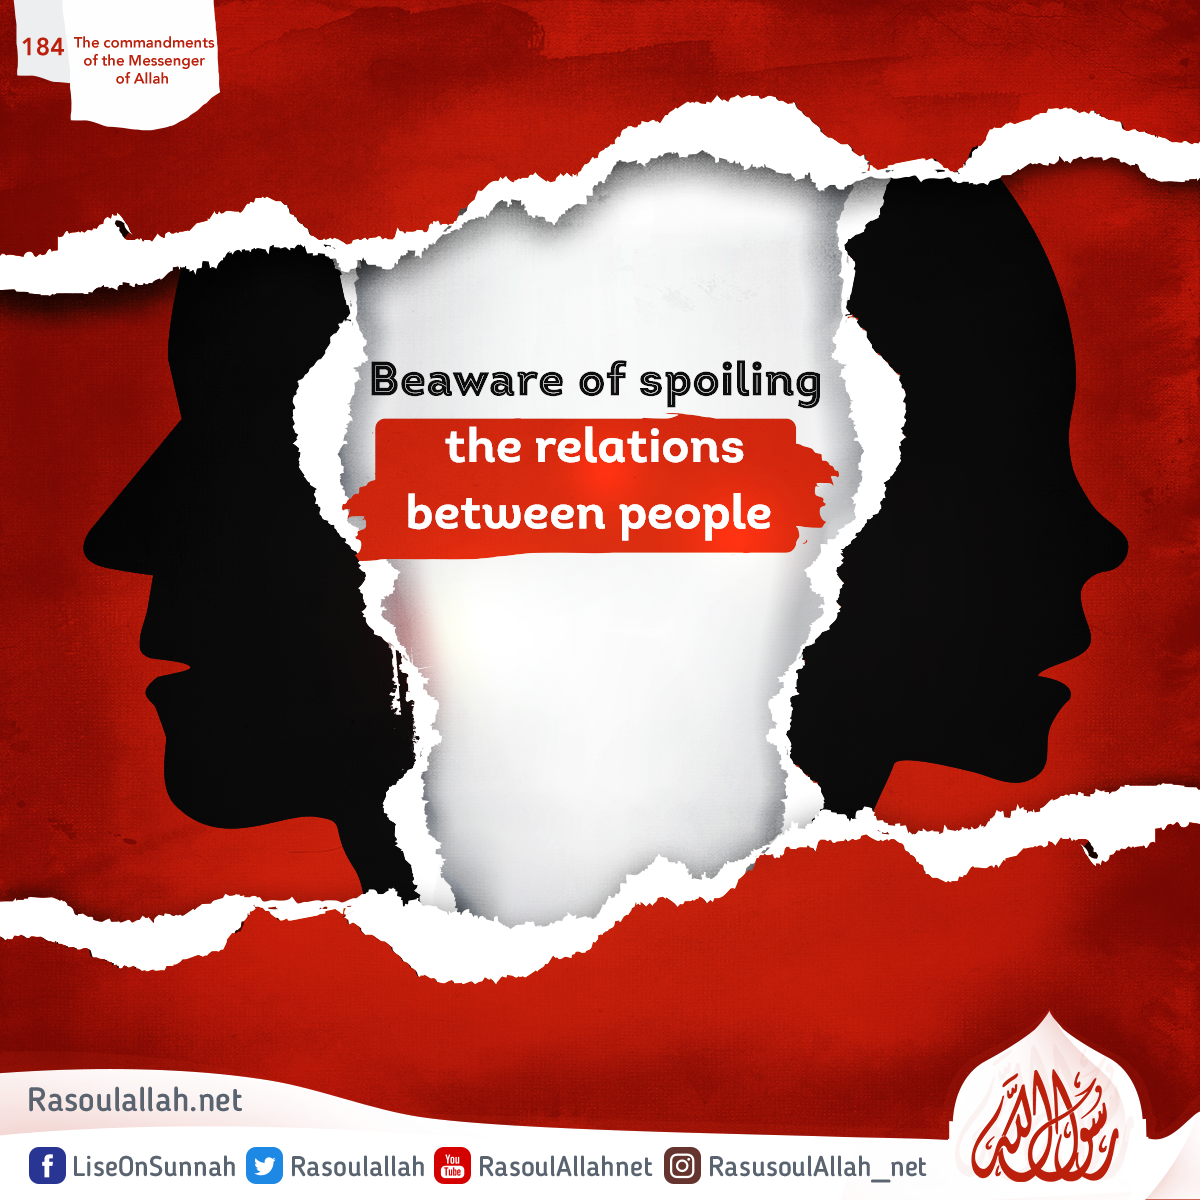 Beaware of spoiling the relations between people